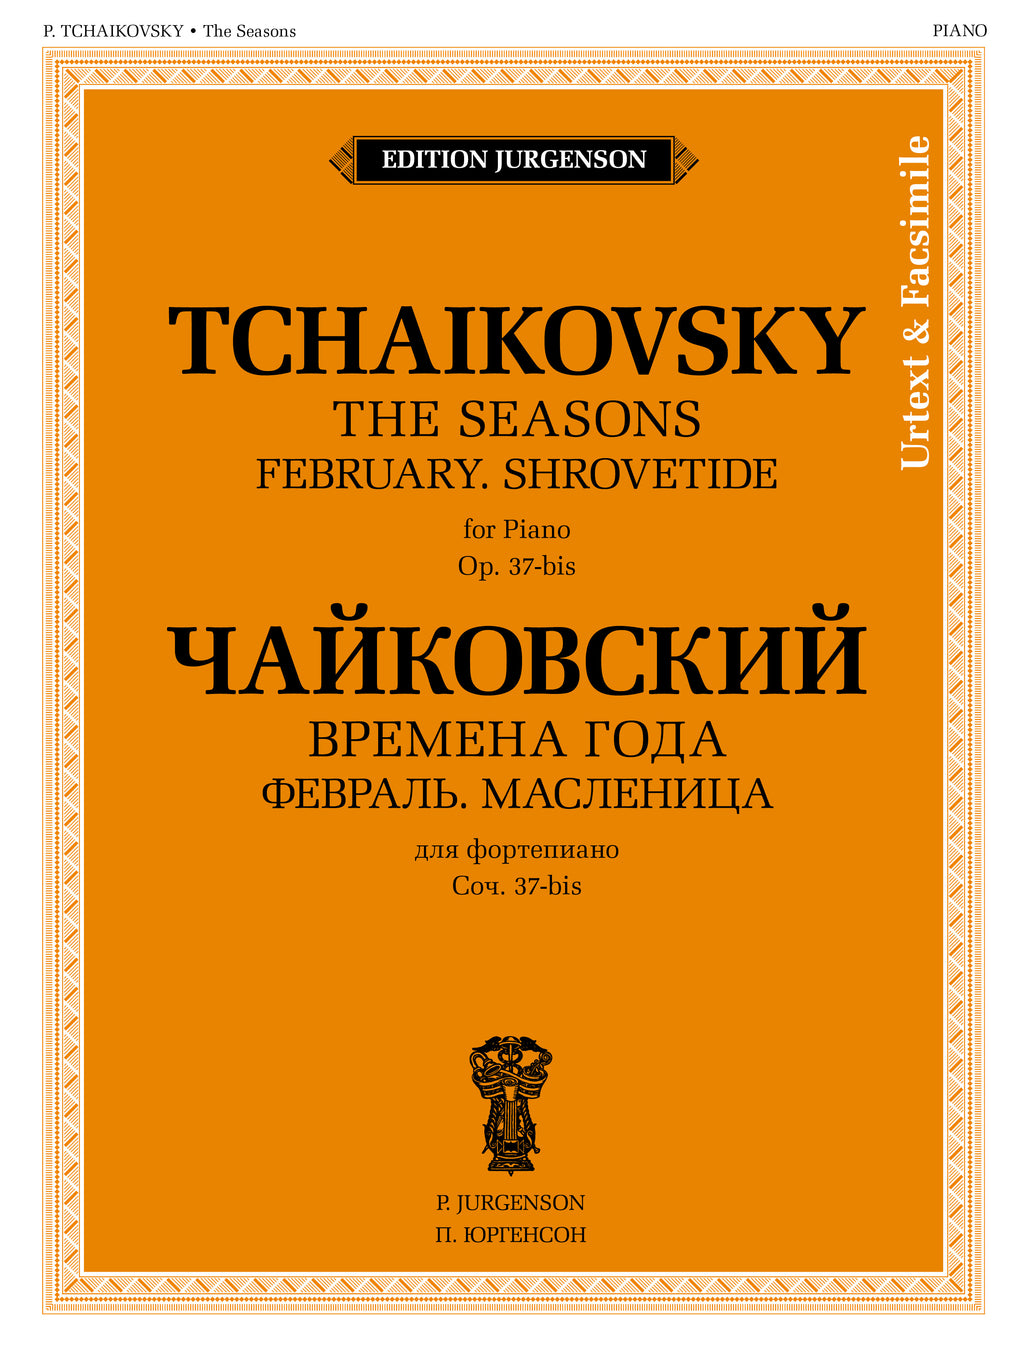 The Seasons: February. Shrovetide: Urtext, facsimile and ed. by Ya. Milstein and K. Sorokin